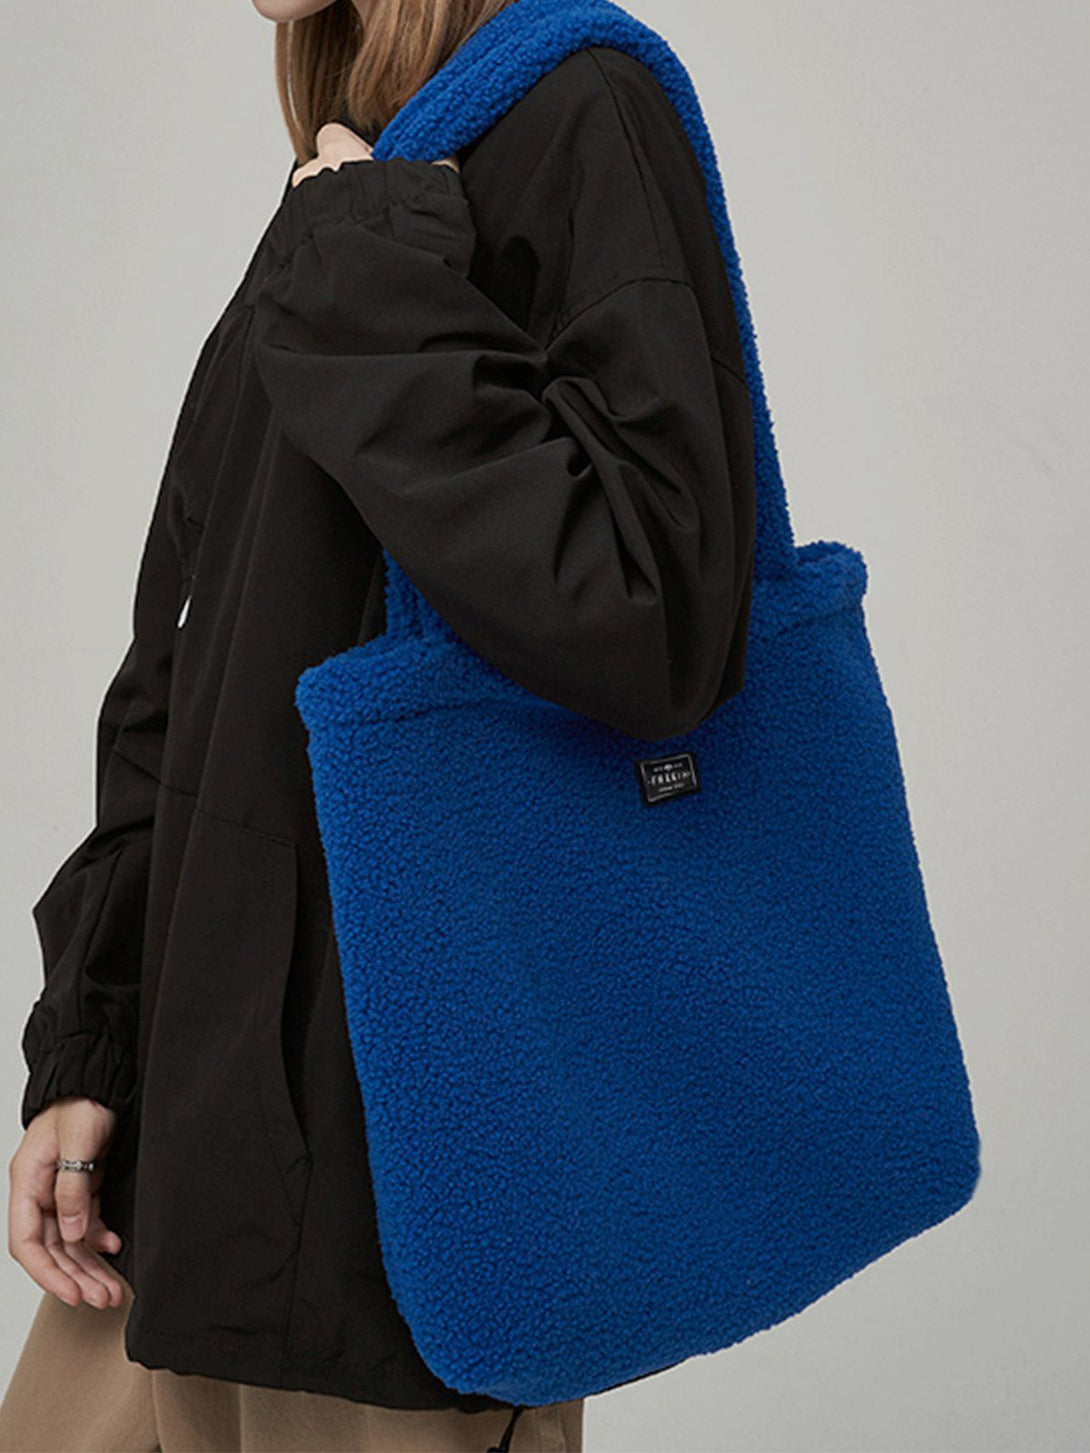 Majesda® - Lambswool Shoulder Bag- Outfit Ideas - Streetwear Fashion - majesda.com